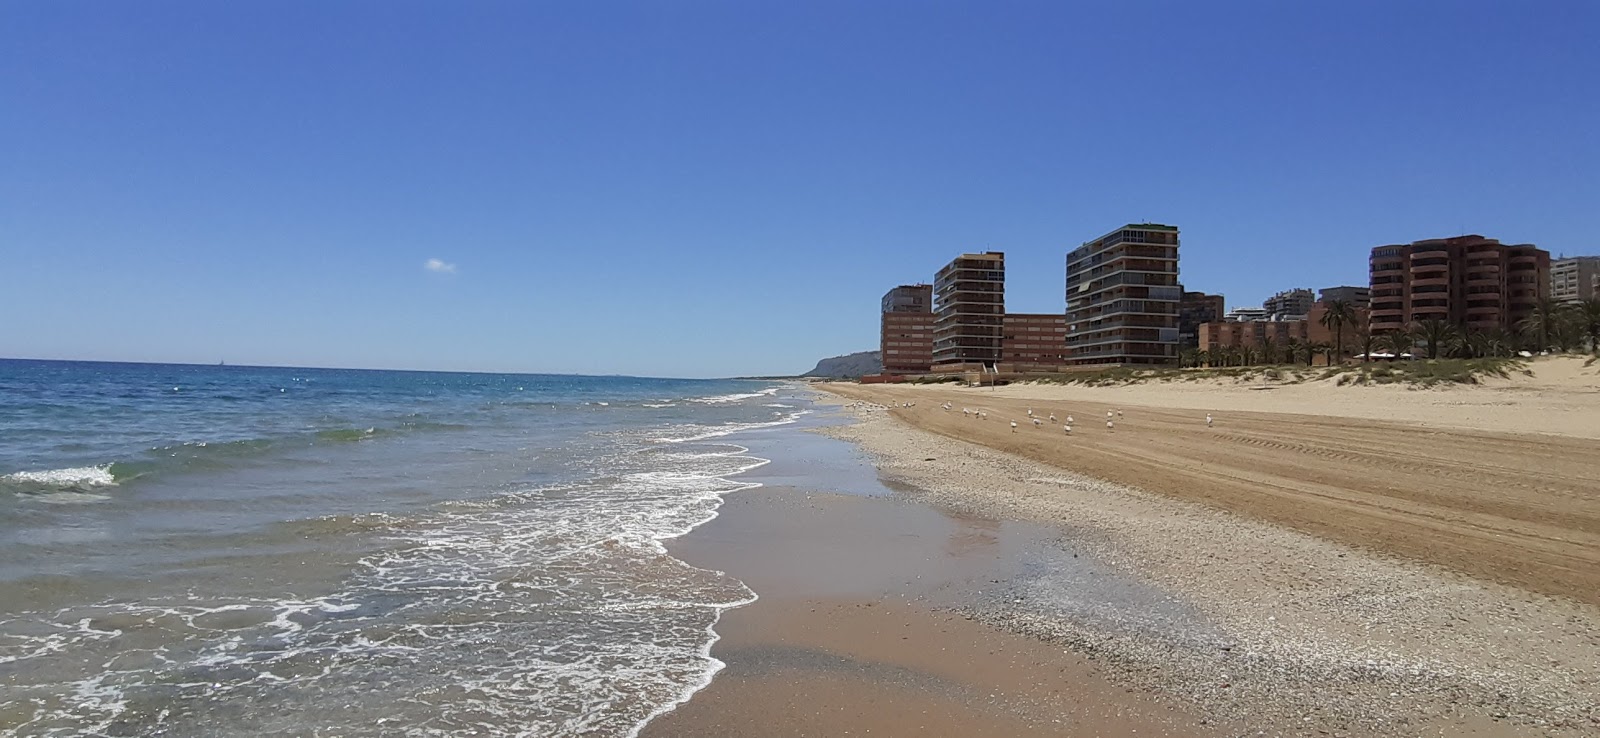 los Arenales del Sol'in fotoğrafı kahverengi kum yüzey ile